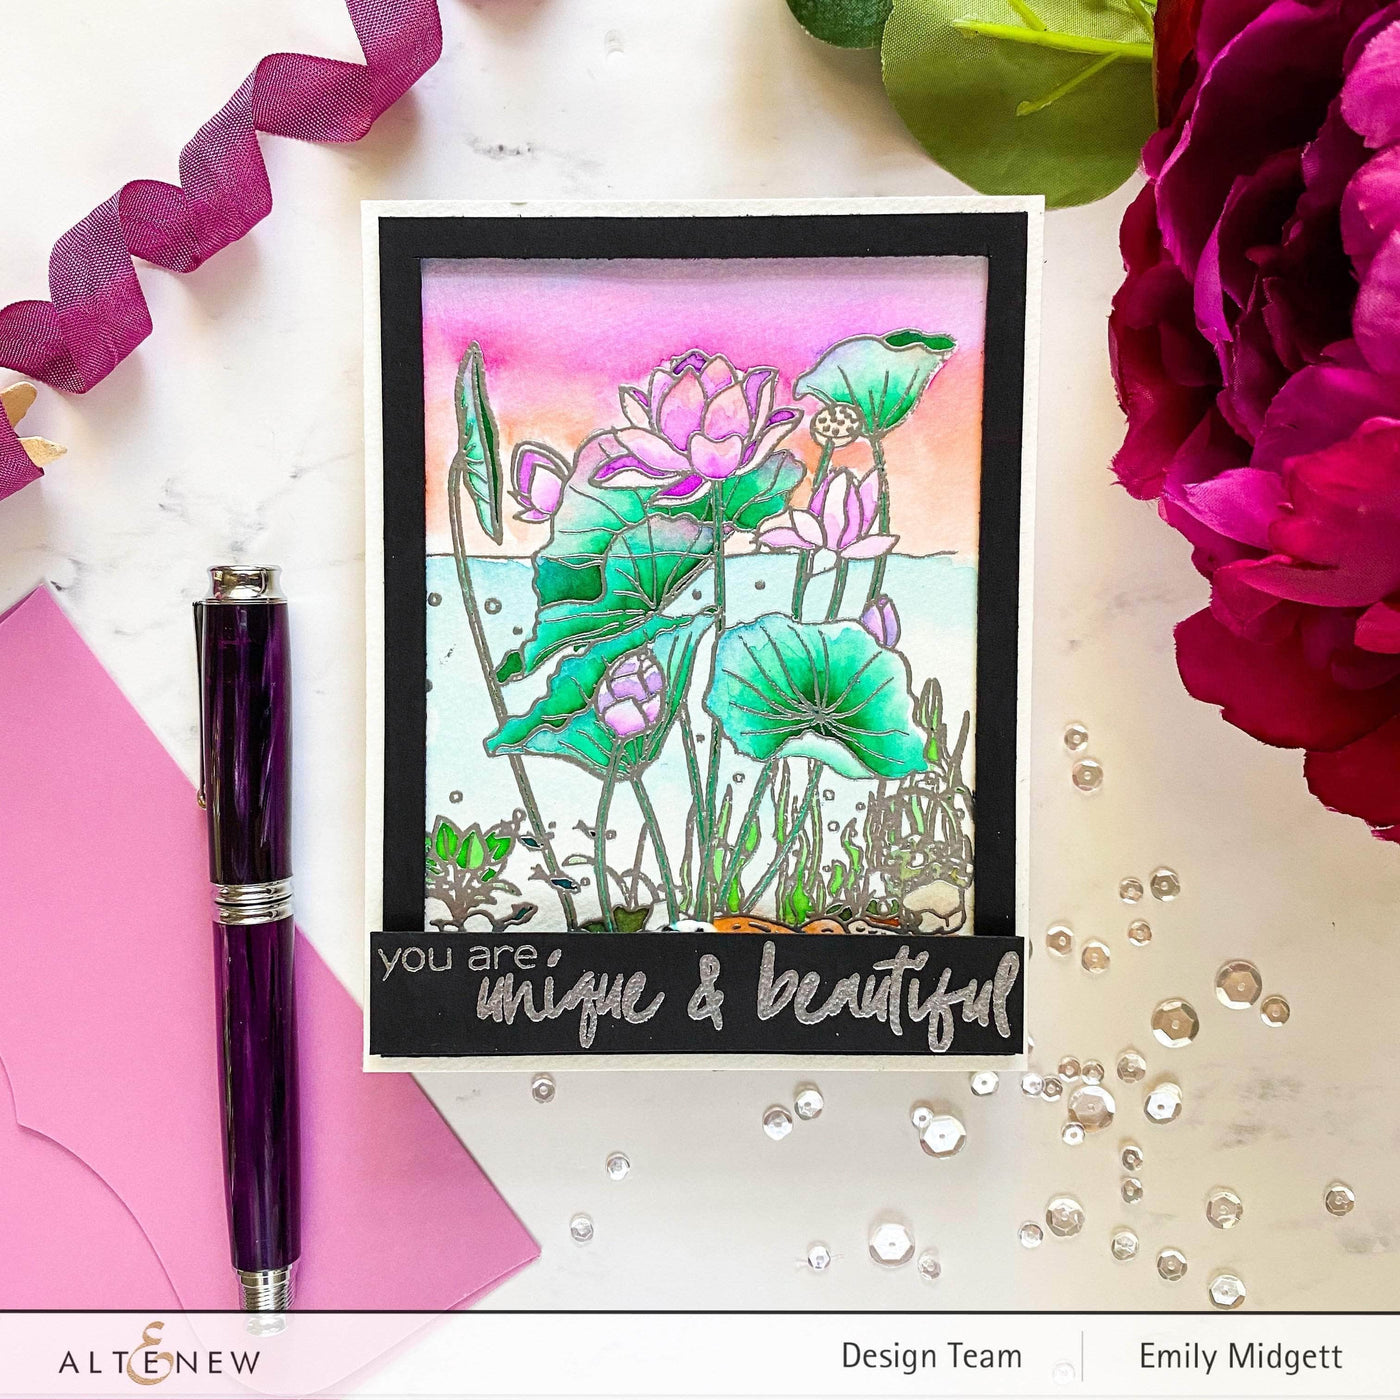 Stamp & Watercolor Bundle Paint-A-Flower: Lotus & Watercolor Essential 12 Pan Set Bundle